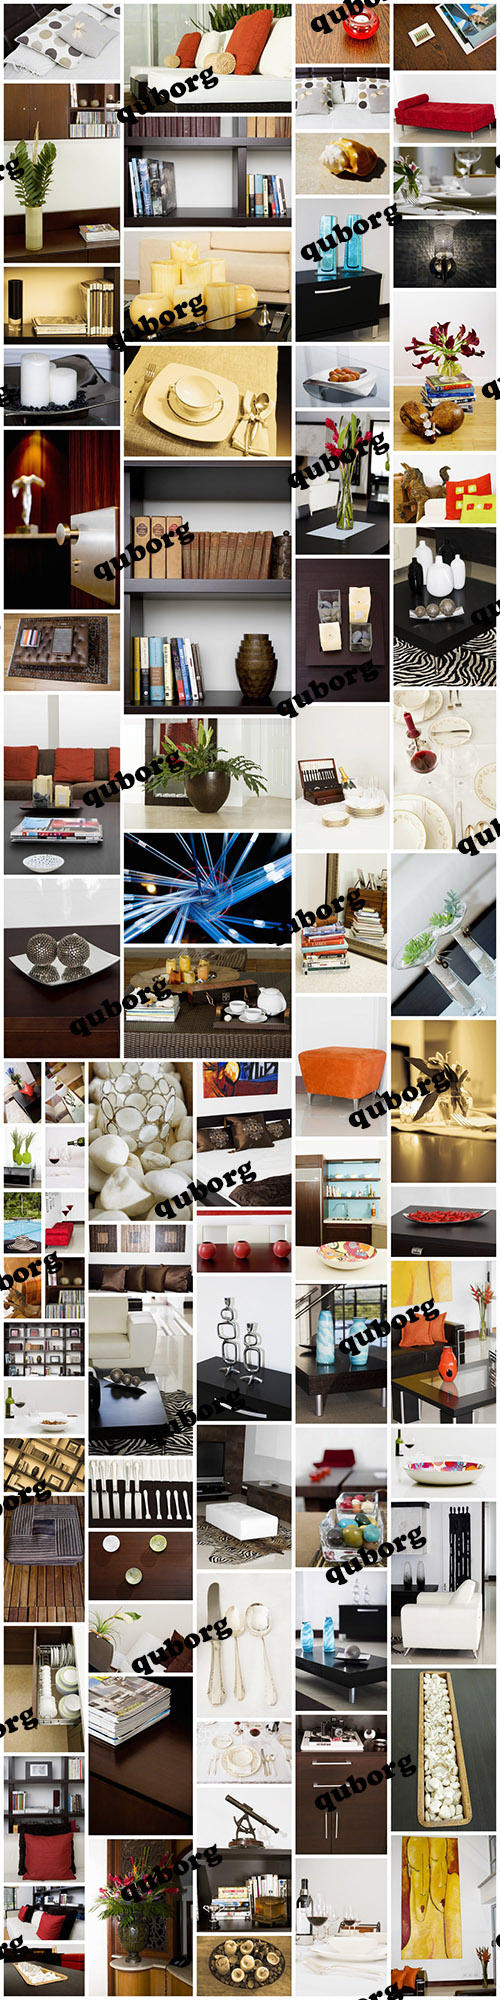 Stock Photos - Modern Home Elements